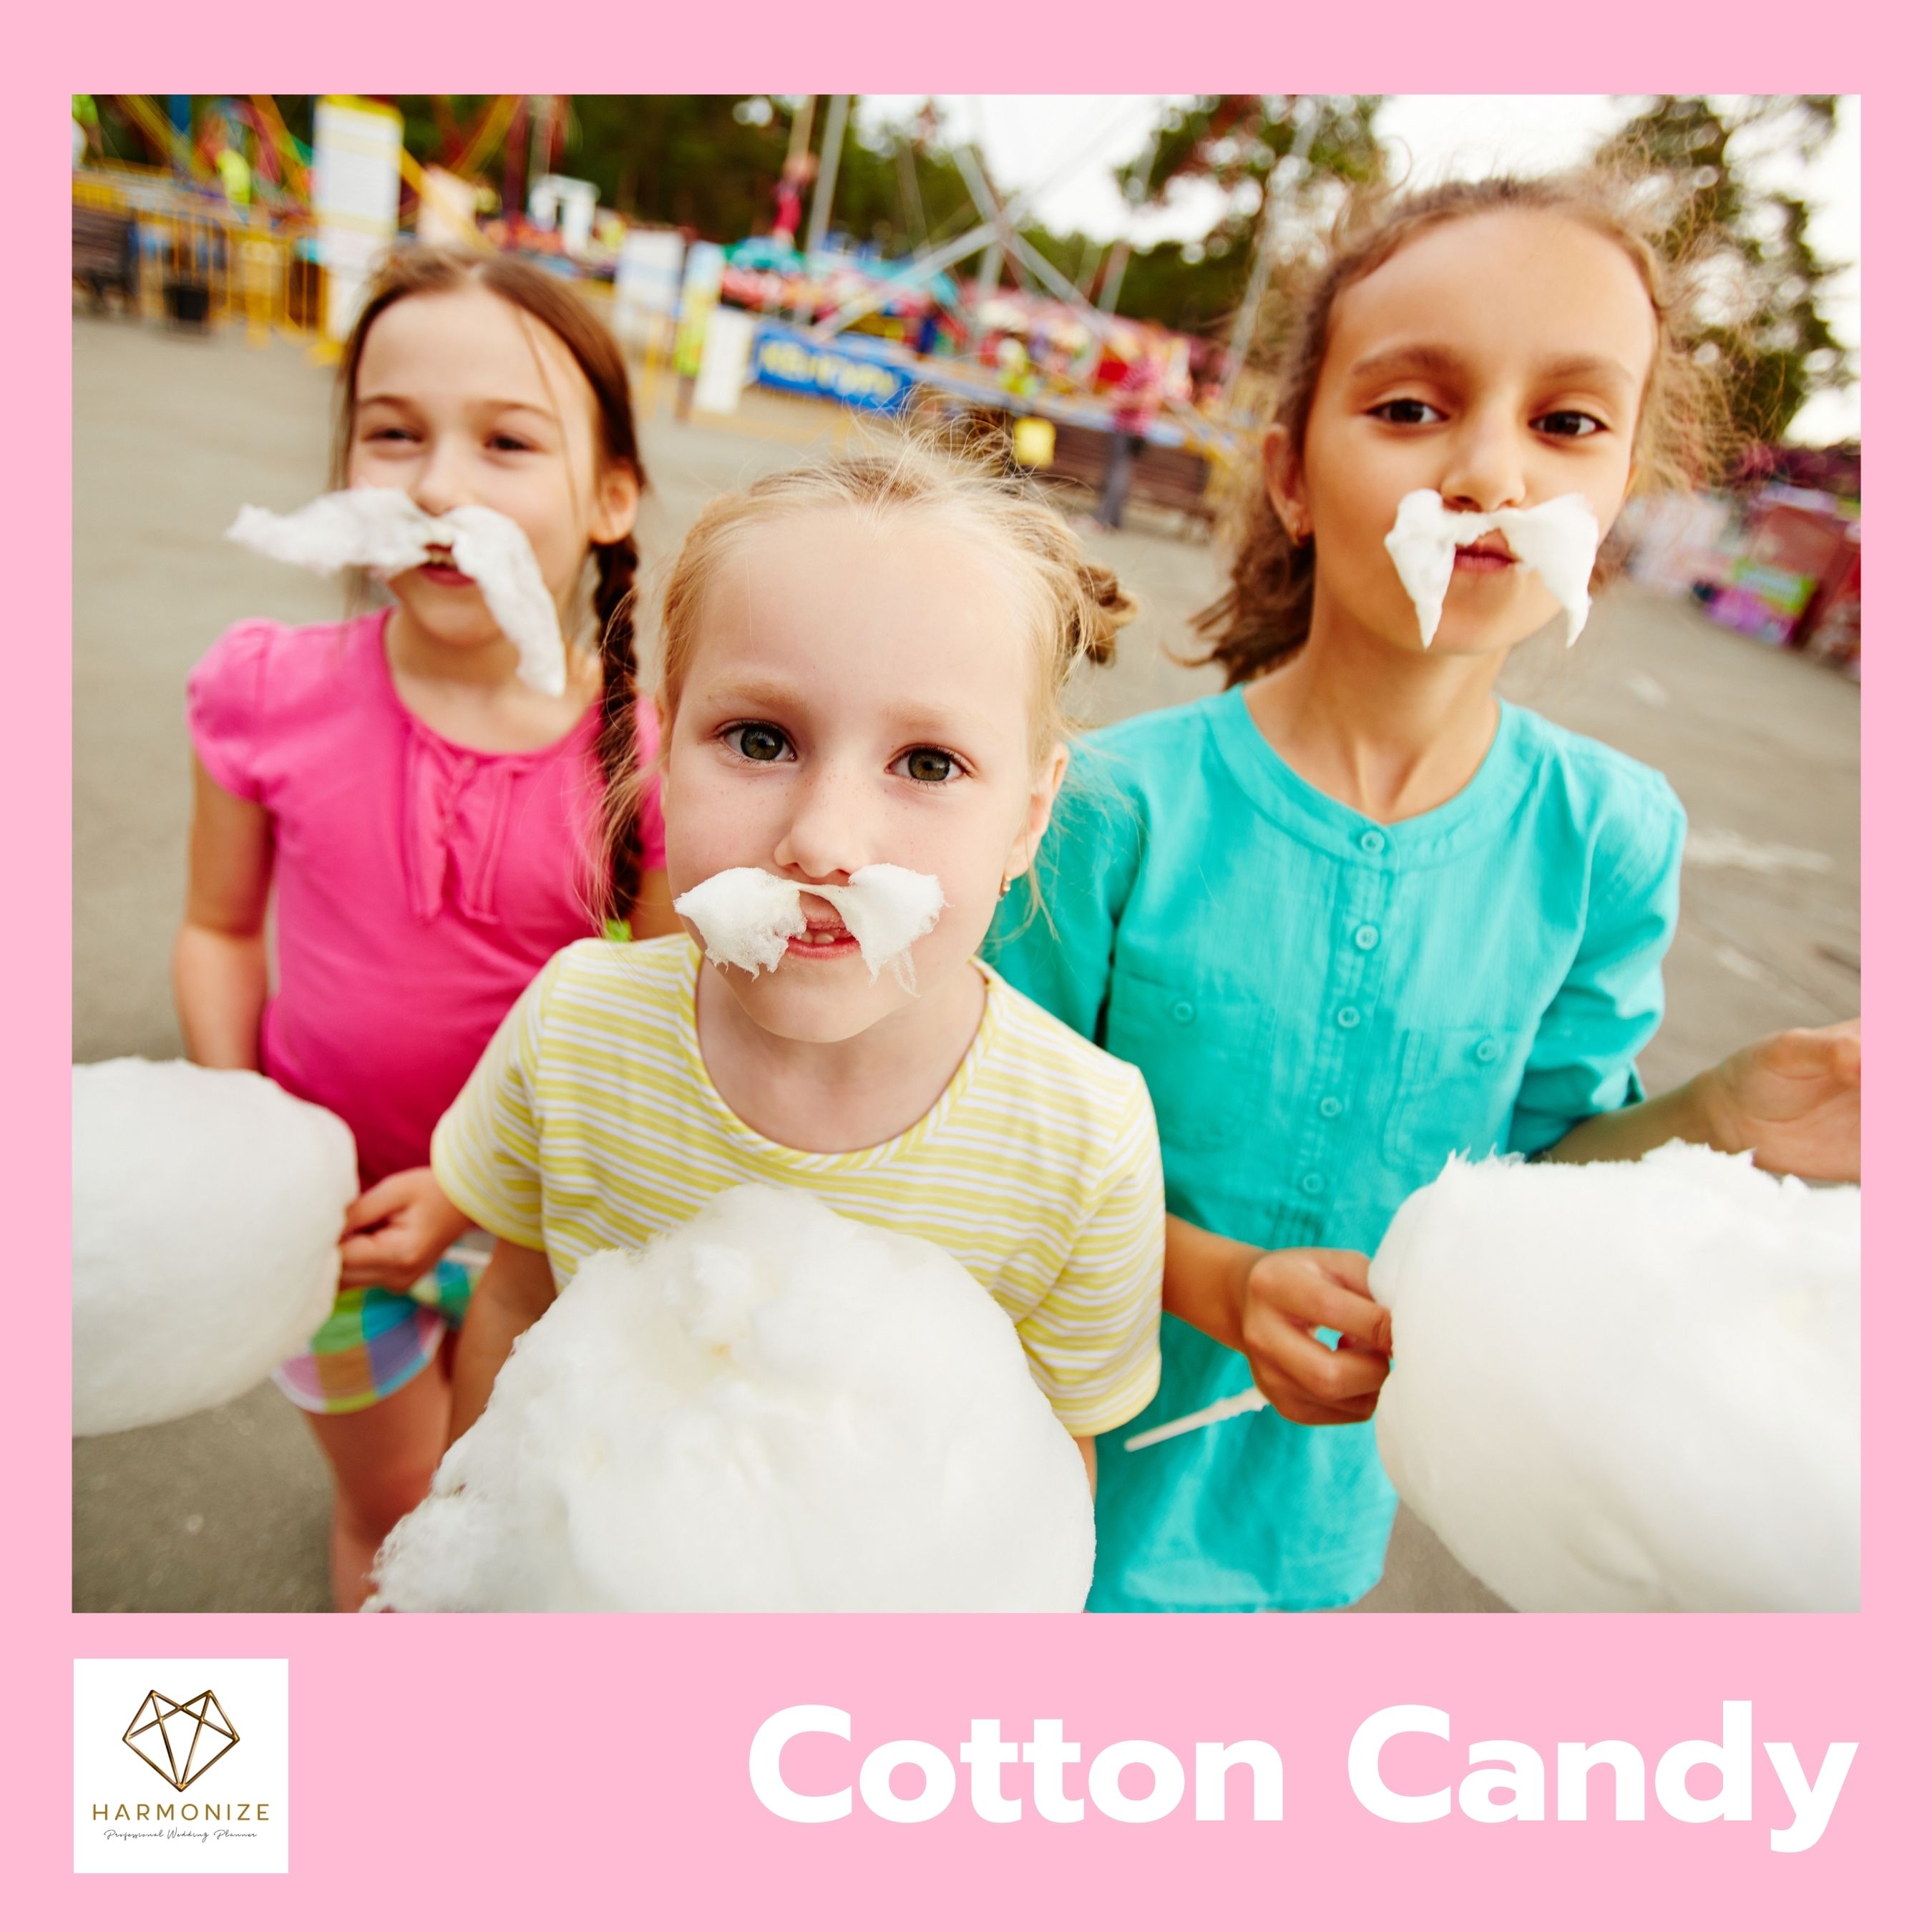 Cotton Candy -  ไอเดียสุดเก๋ สำหรับ "อาหาร" Wedding & Party